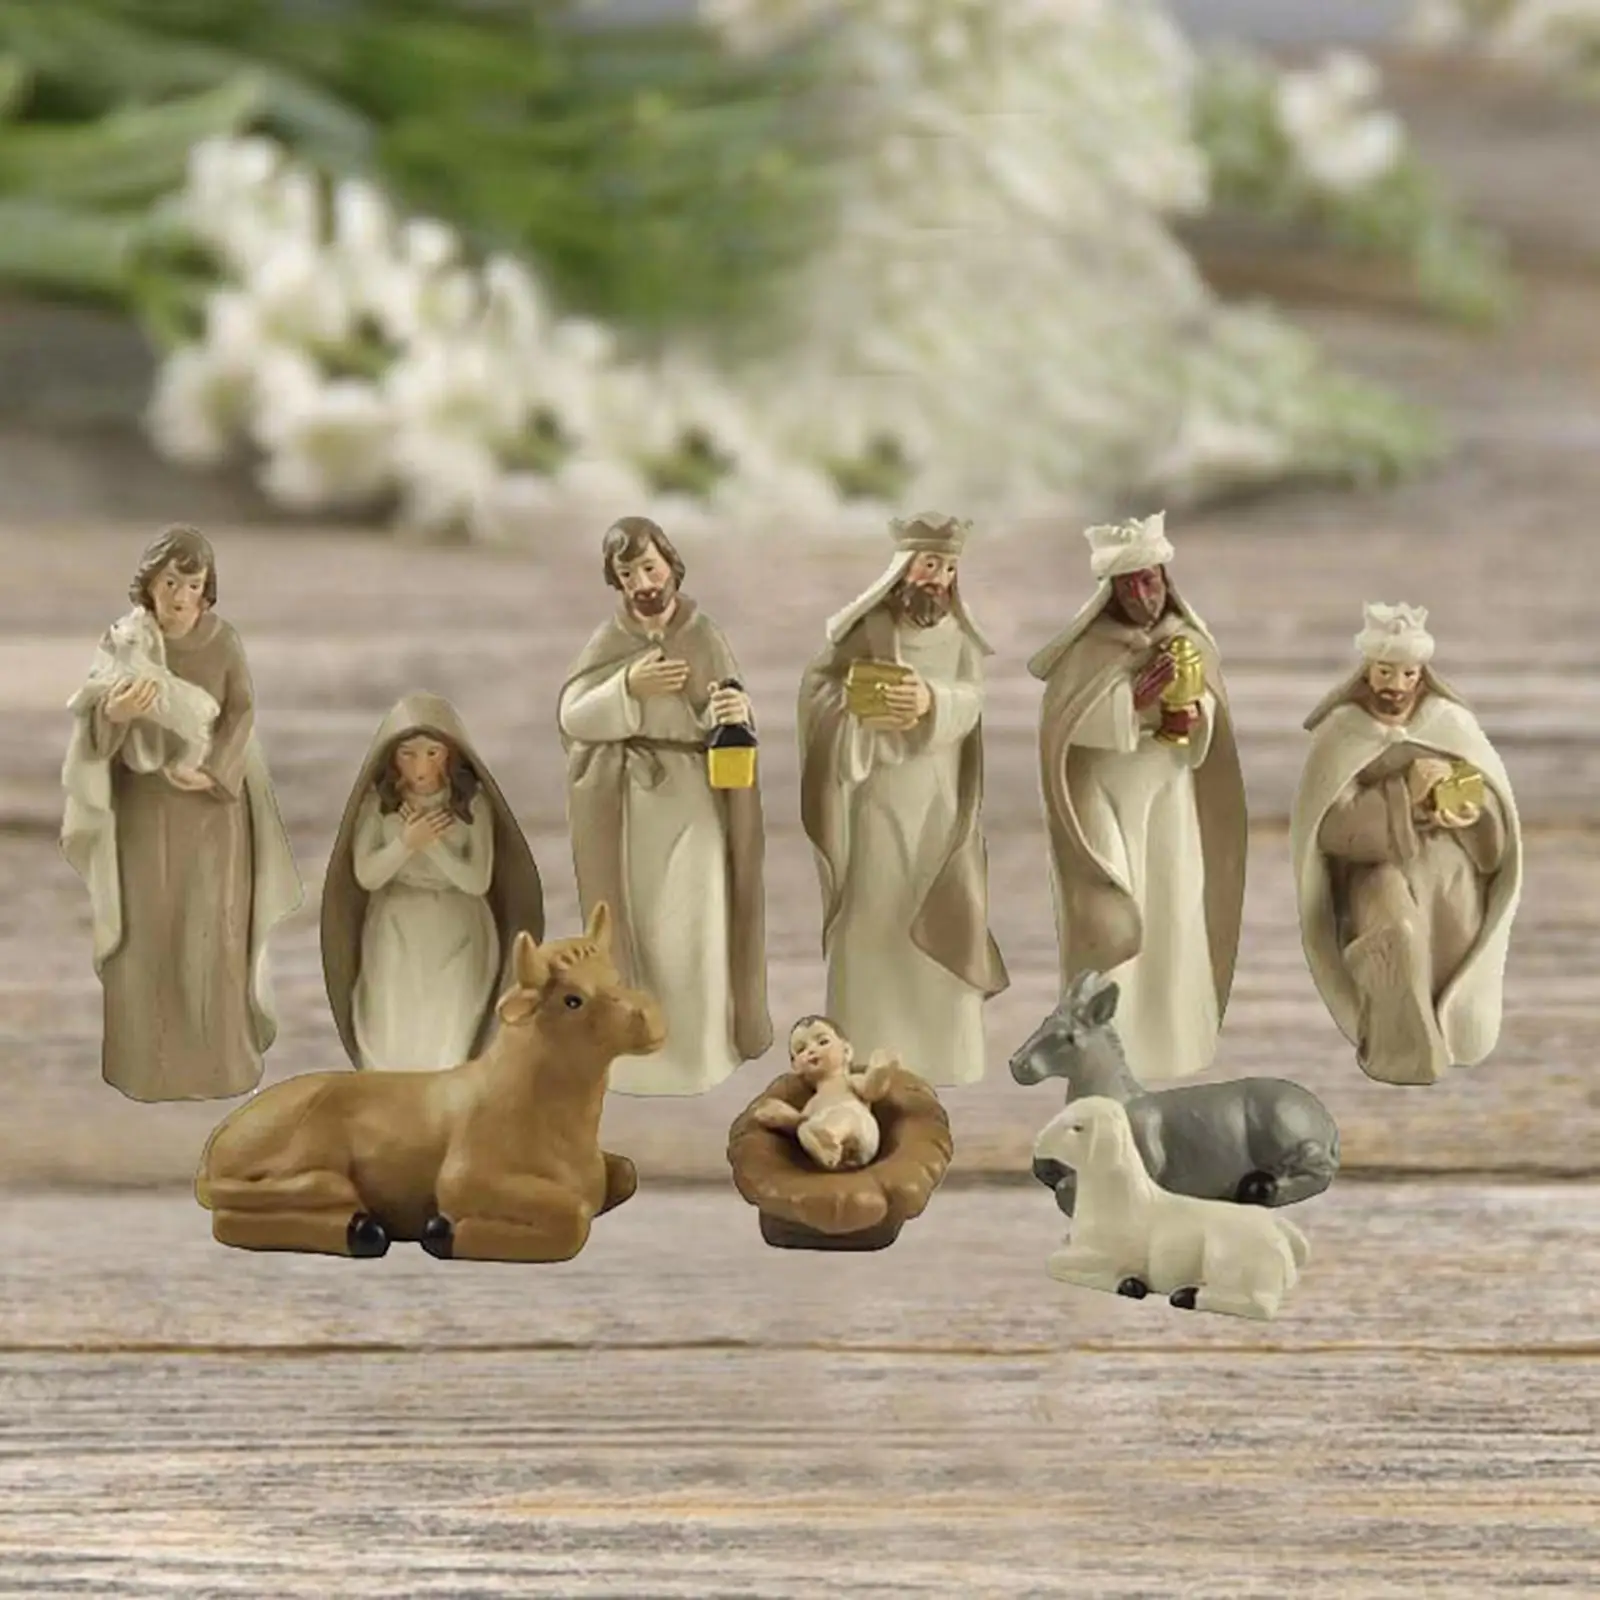 Set of 10 Nativity Figurines , Christmas Nativity Set - Nativity Baby Christmas Figures Ornament Gift Home Cabinet Decor